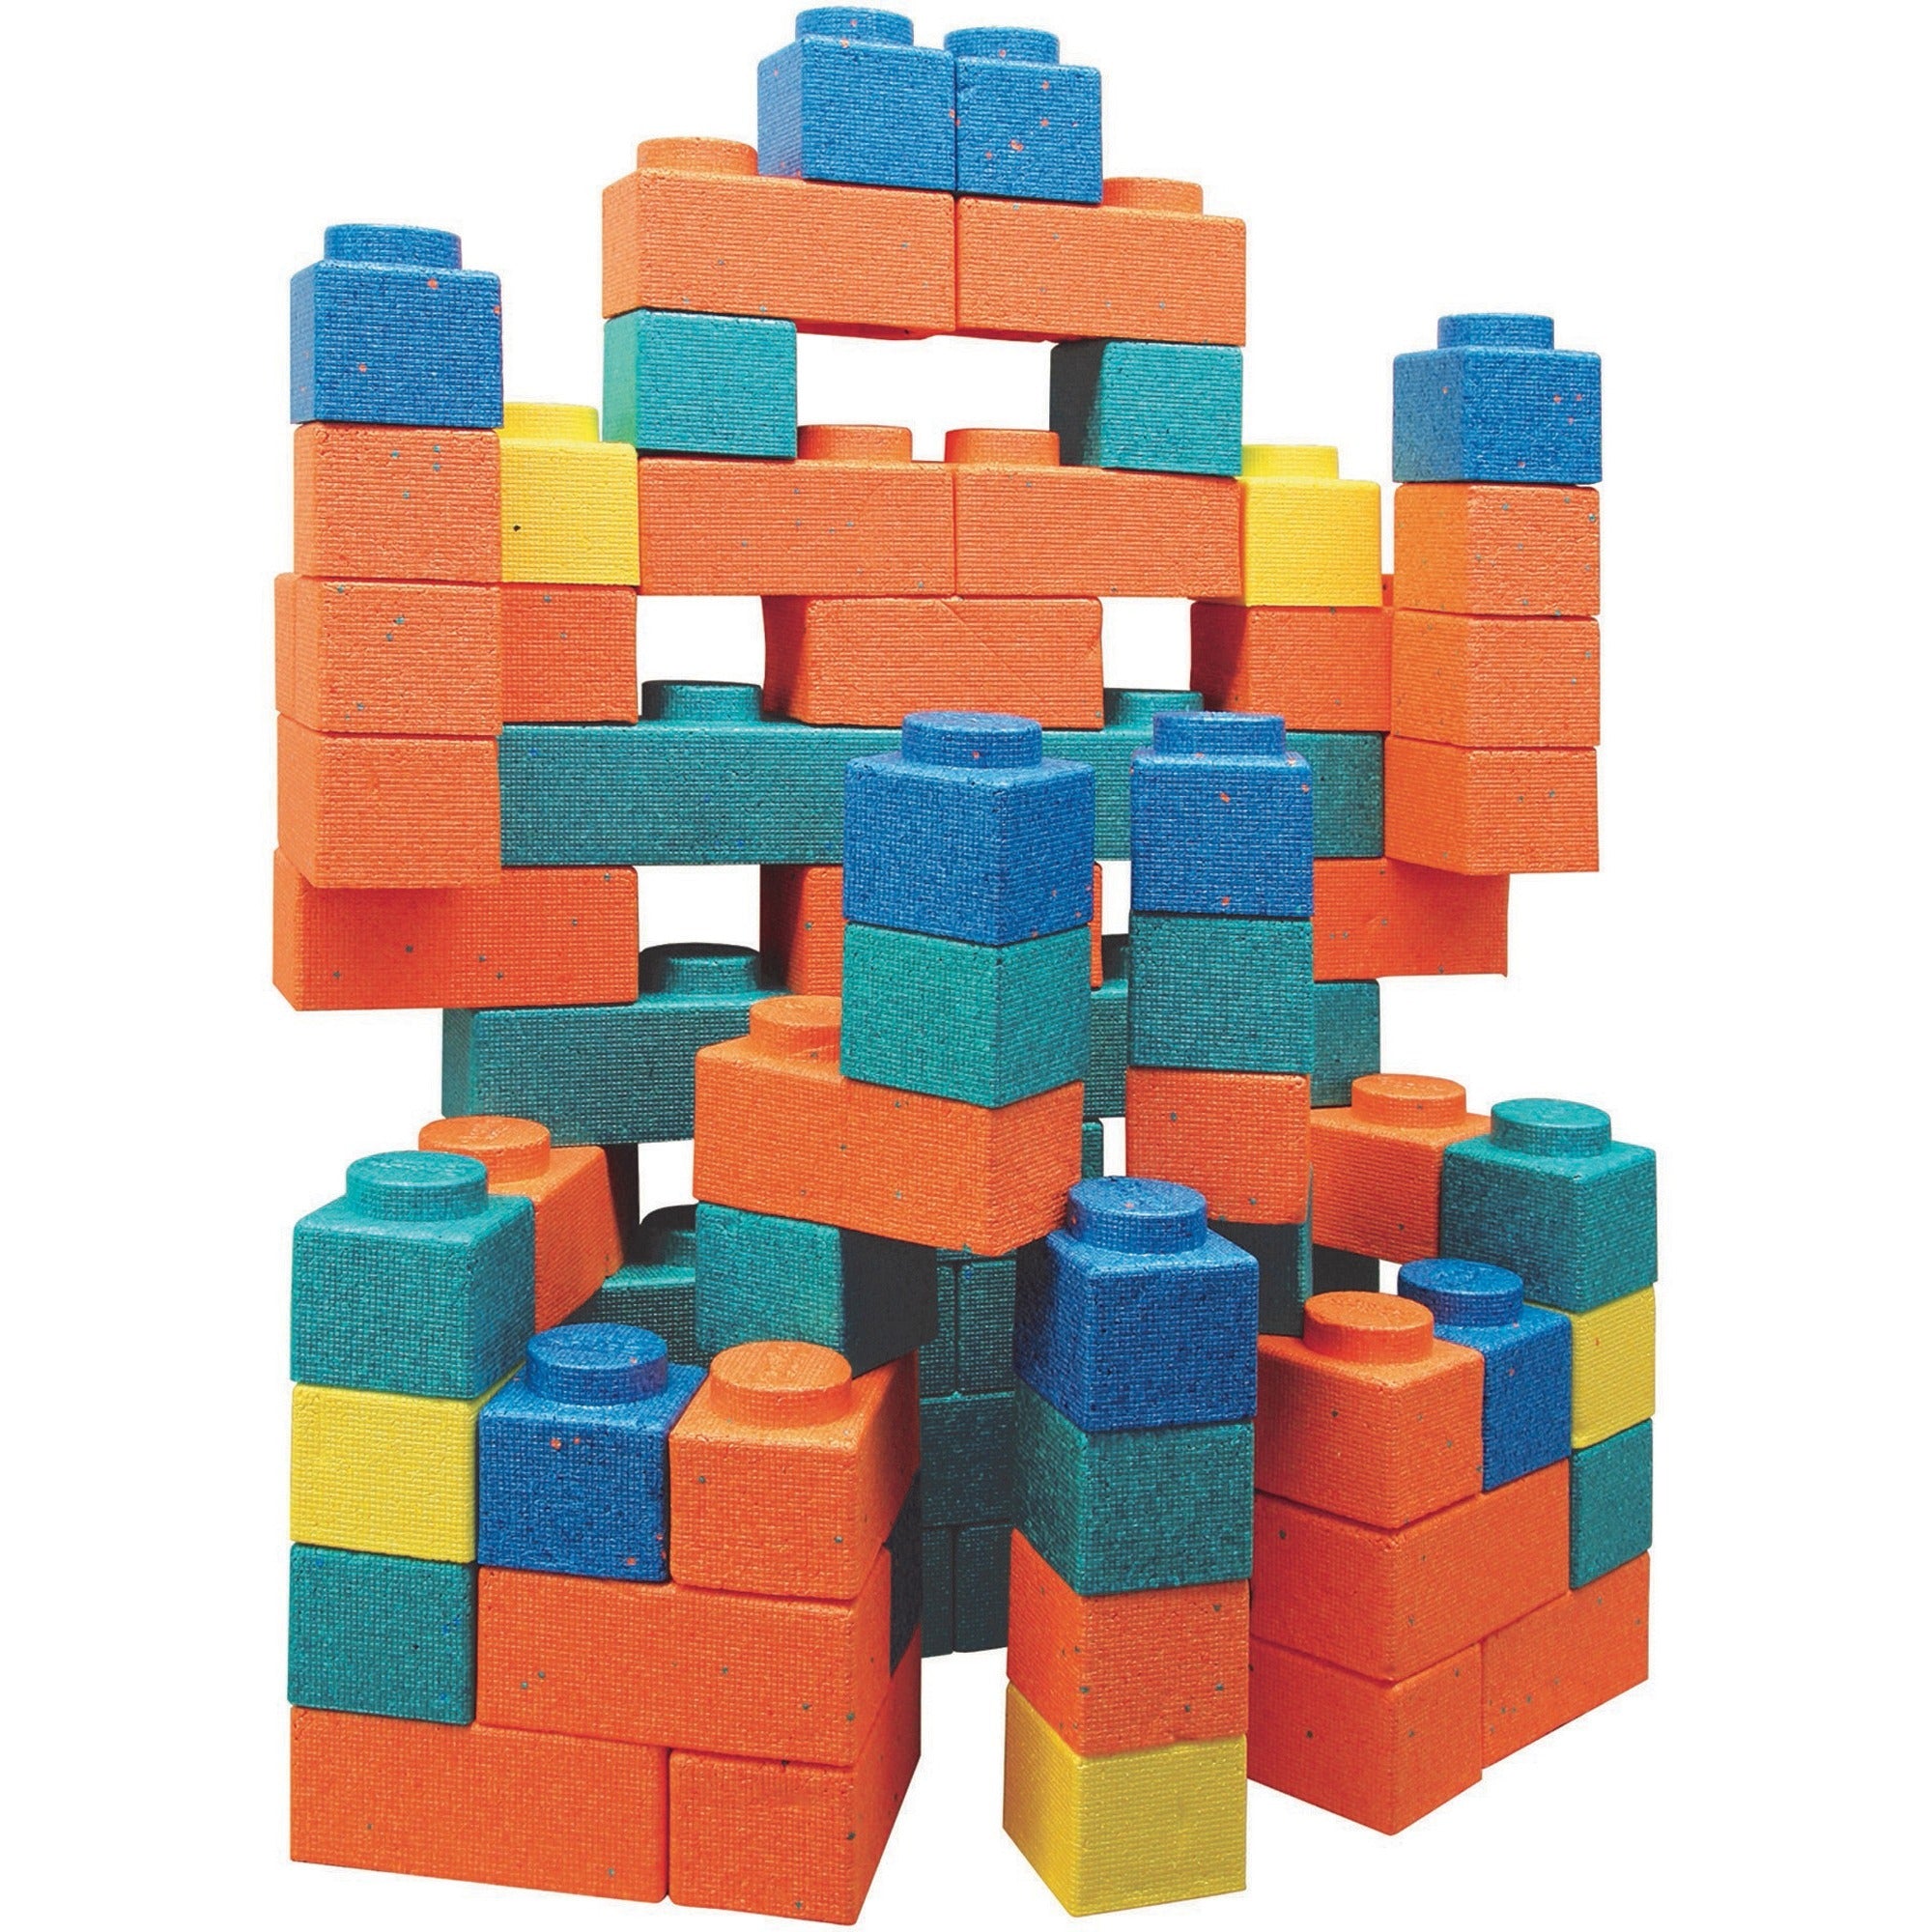 pacon-gorilla-blocks-extra-large-building-blocks-skill-learning-creativity-logic-reasoning-communication-eye-hand-coordination-motor-skills-1-year-&-up-66-pieces-assorted_pac00384 - 1